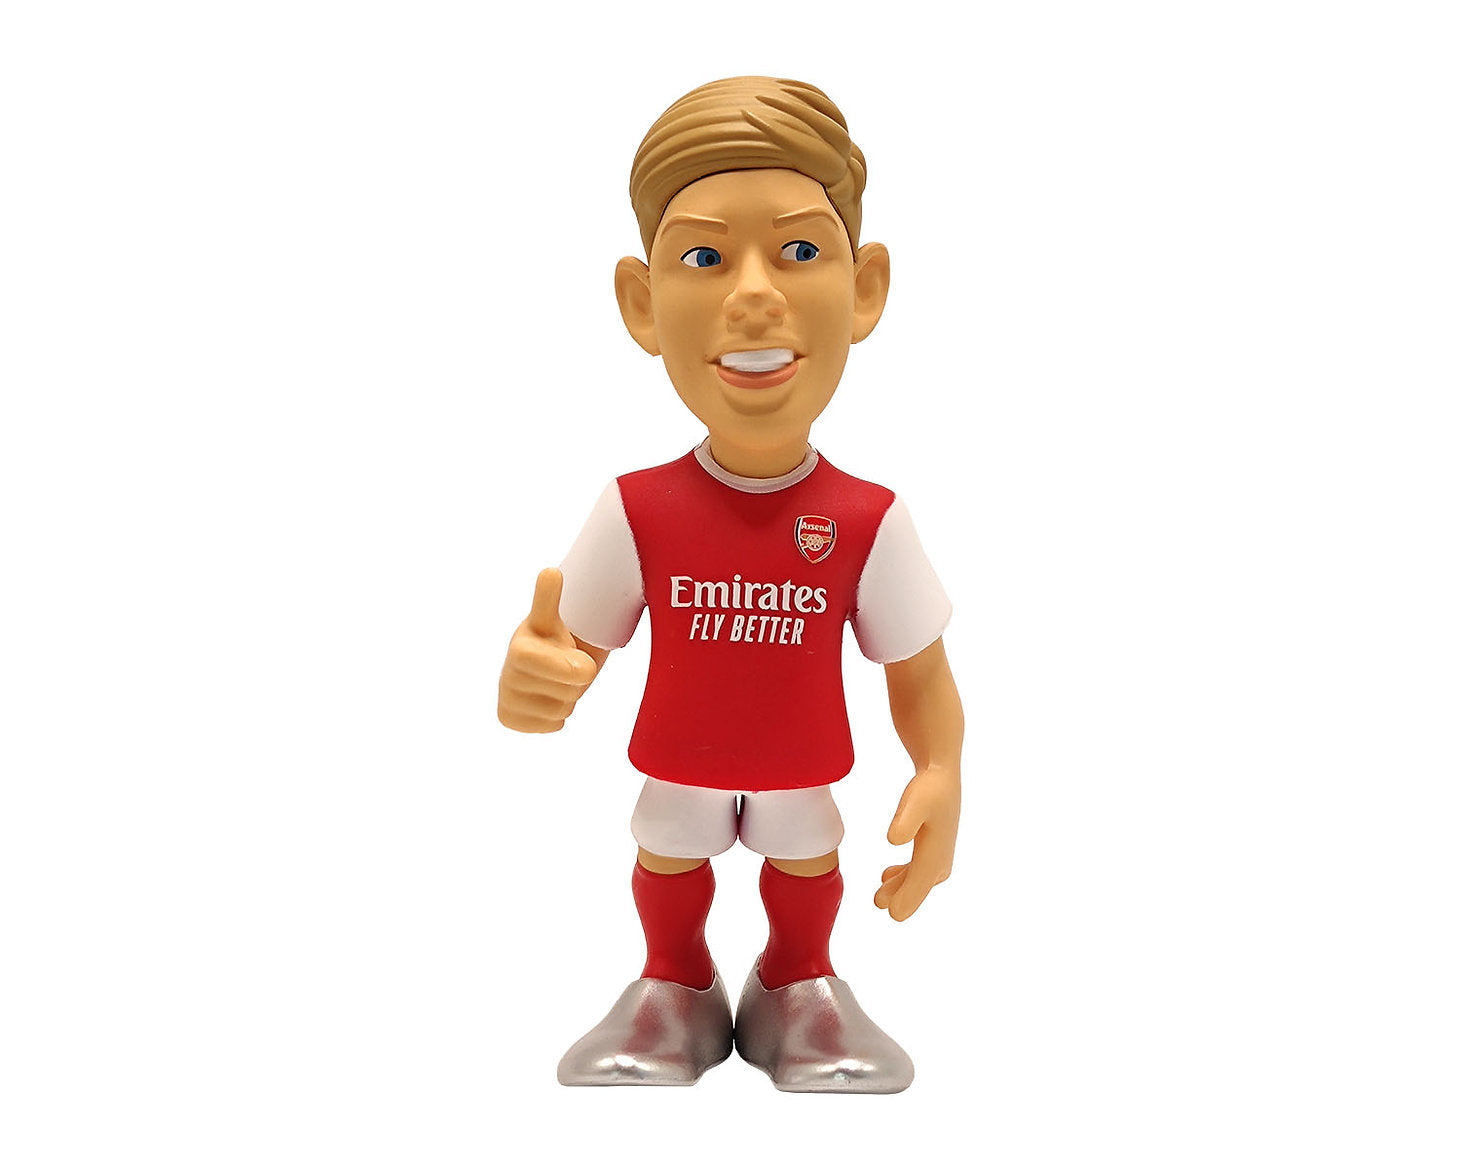 Minix - Football Stars #149 - Arsenal - Emile Smith-Rowe "10" - Figurine 12cm